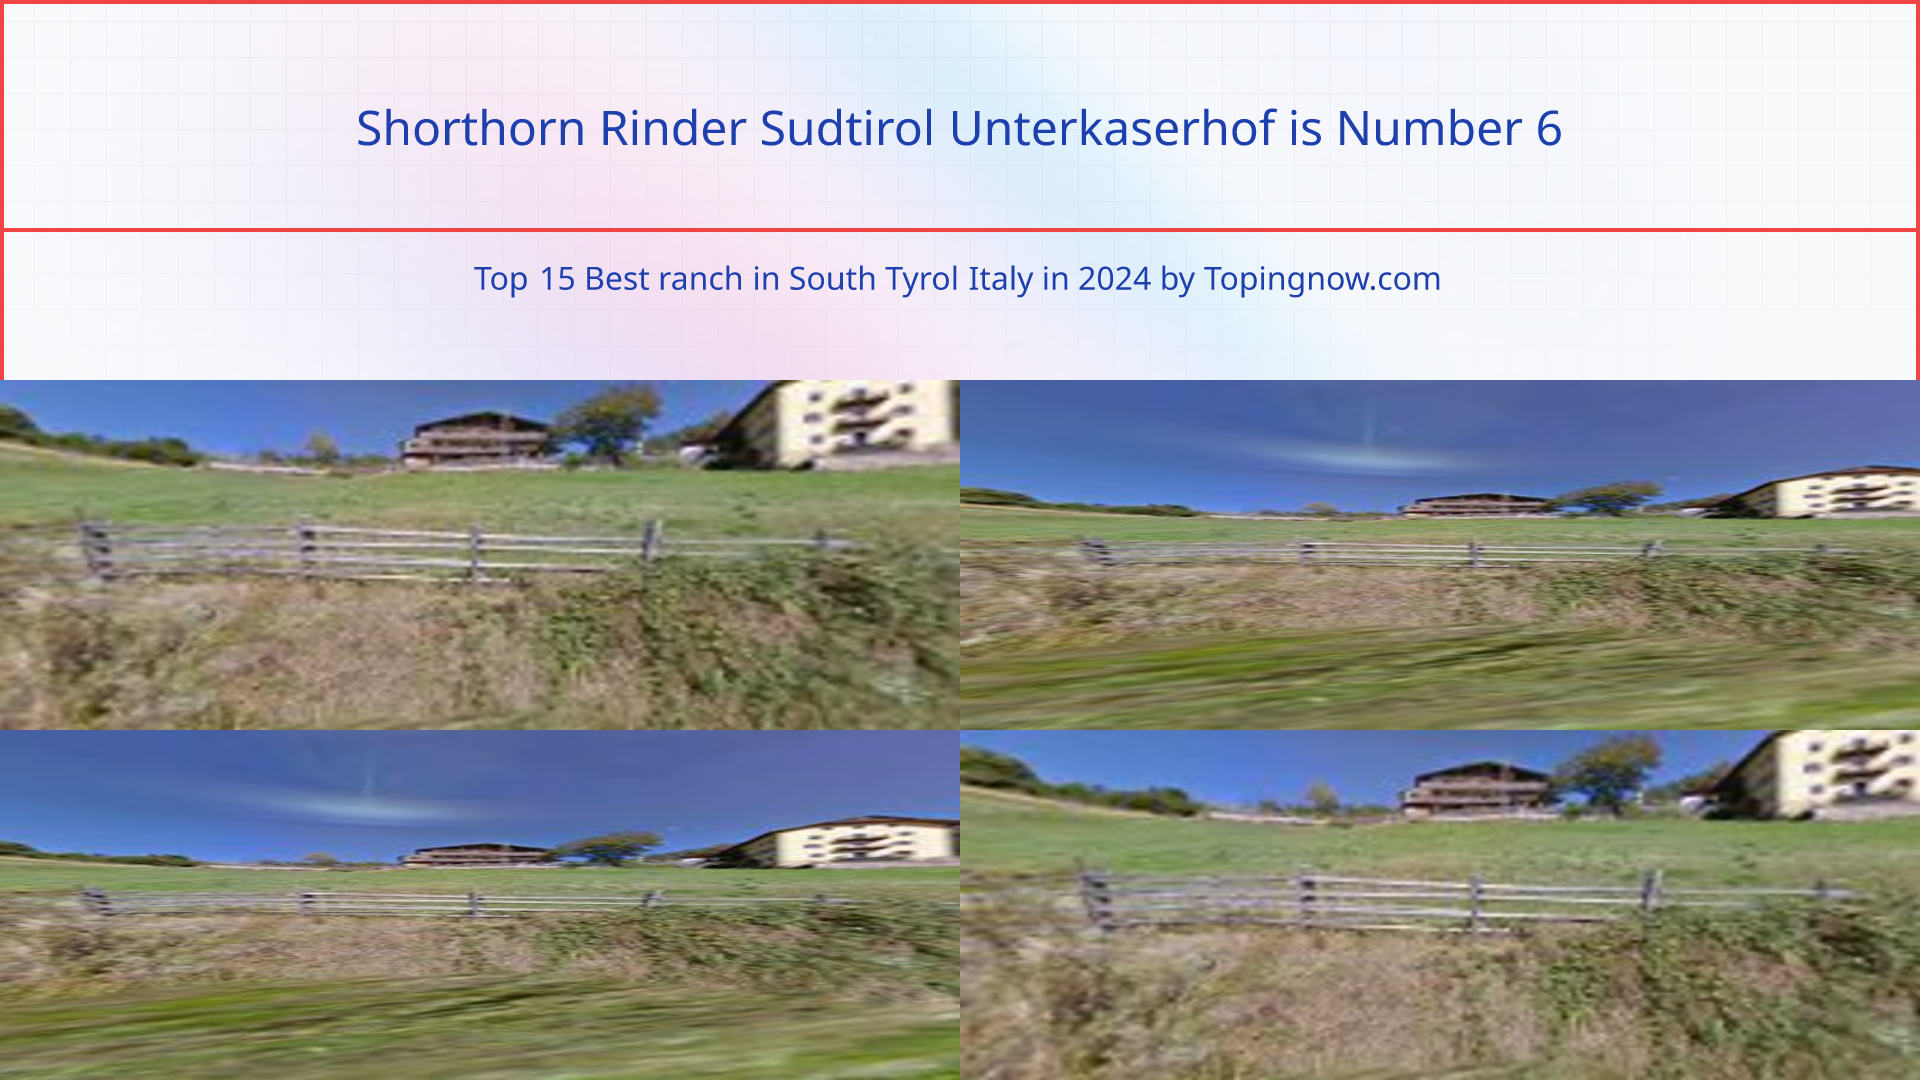 Shorthorn Rinder Sudtirol Unterkaserhof: Top 15 Best ranch in South Tyrol Italy in 2024